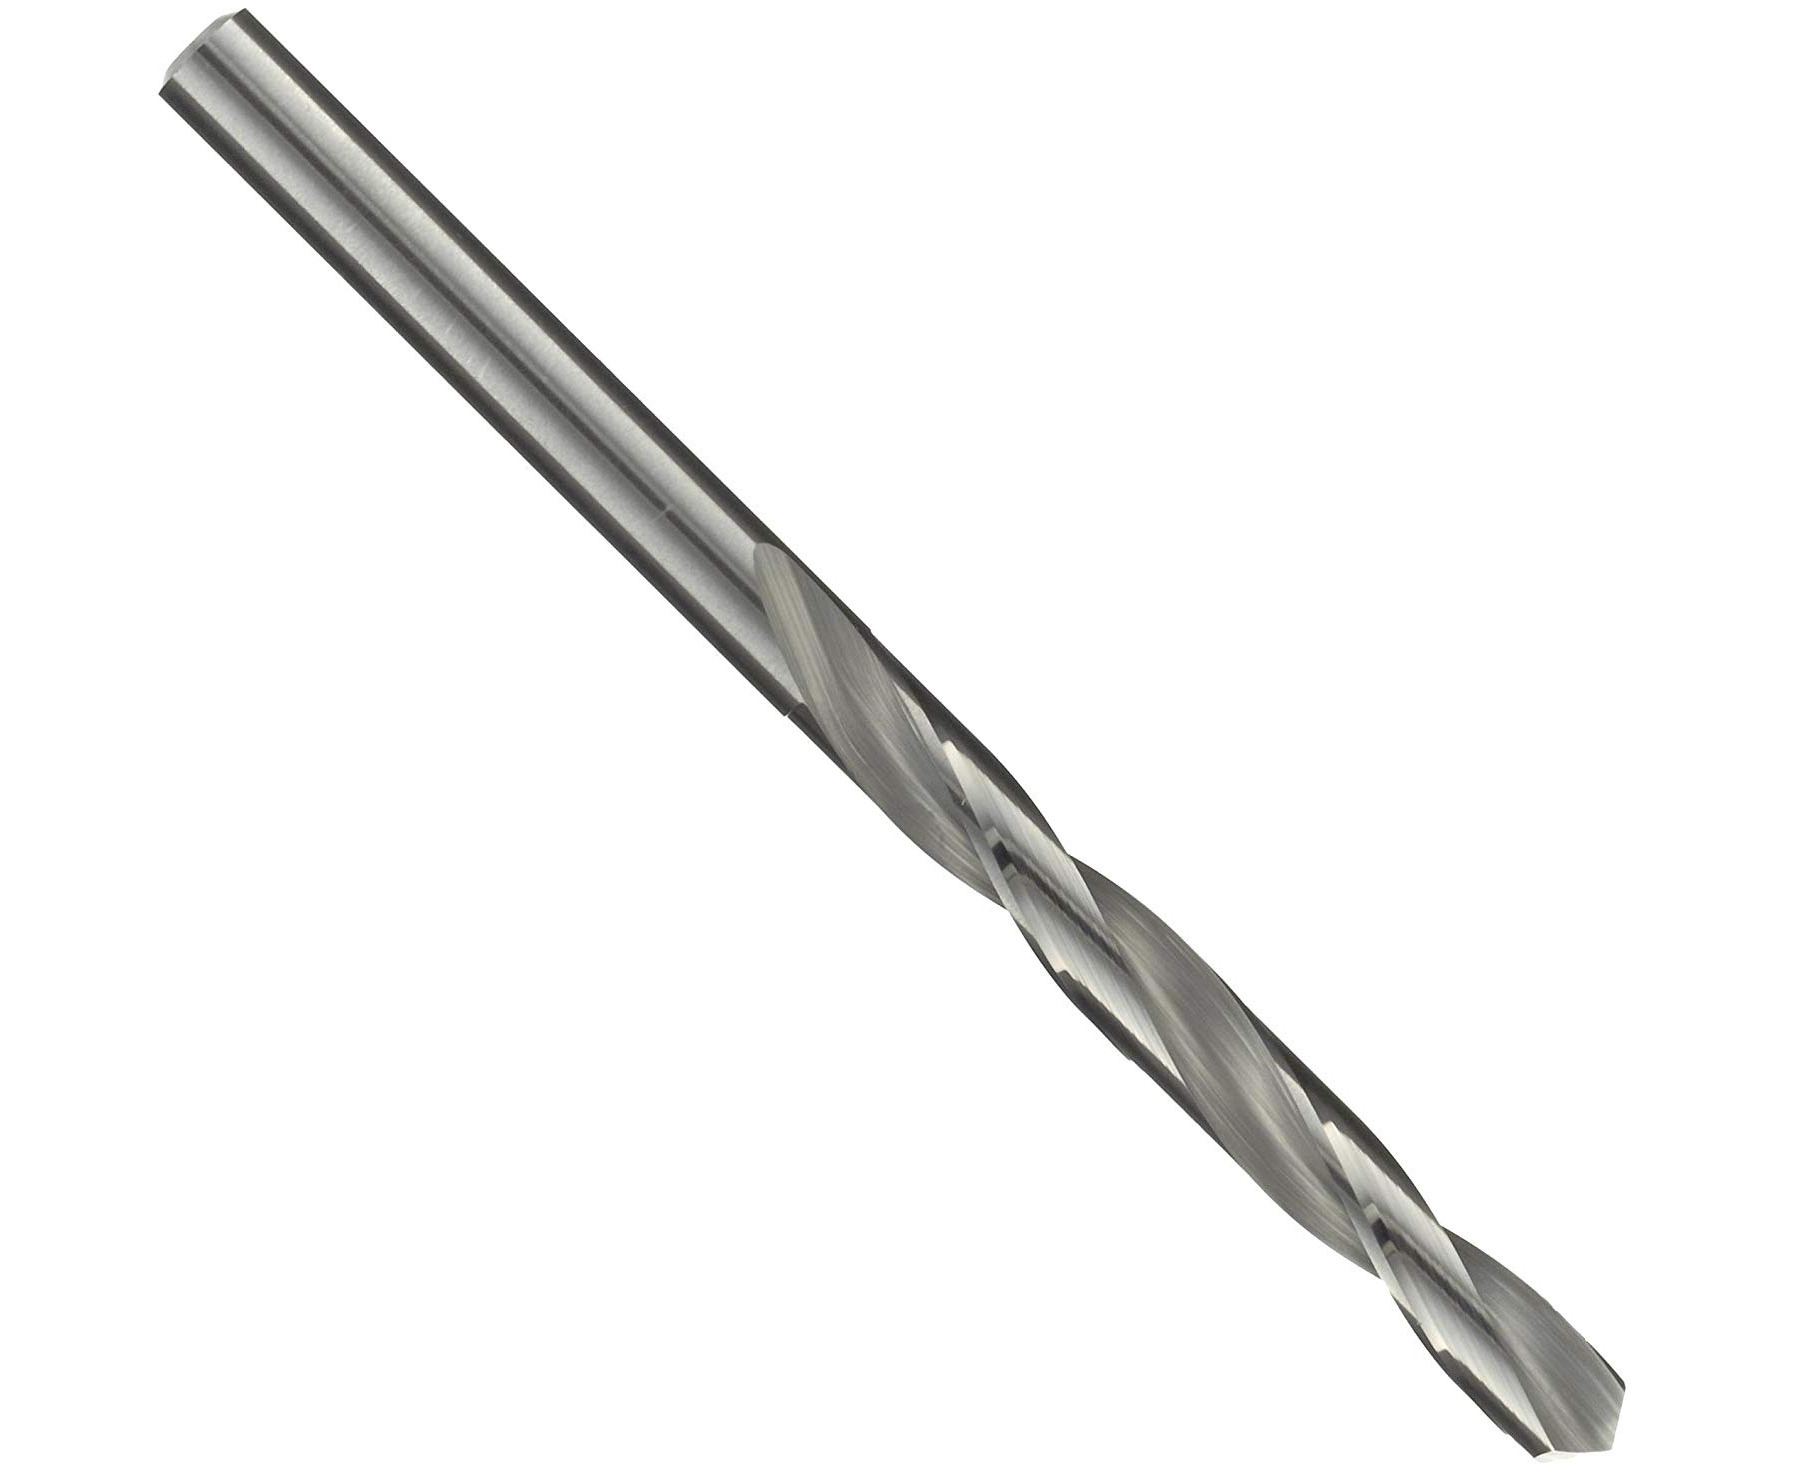 25mm Twist Drill Bit,Speed Steel Twist Flute Spiral Flute Drill Bit with 1/2 Shank for Boring and milling 